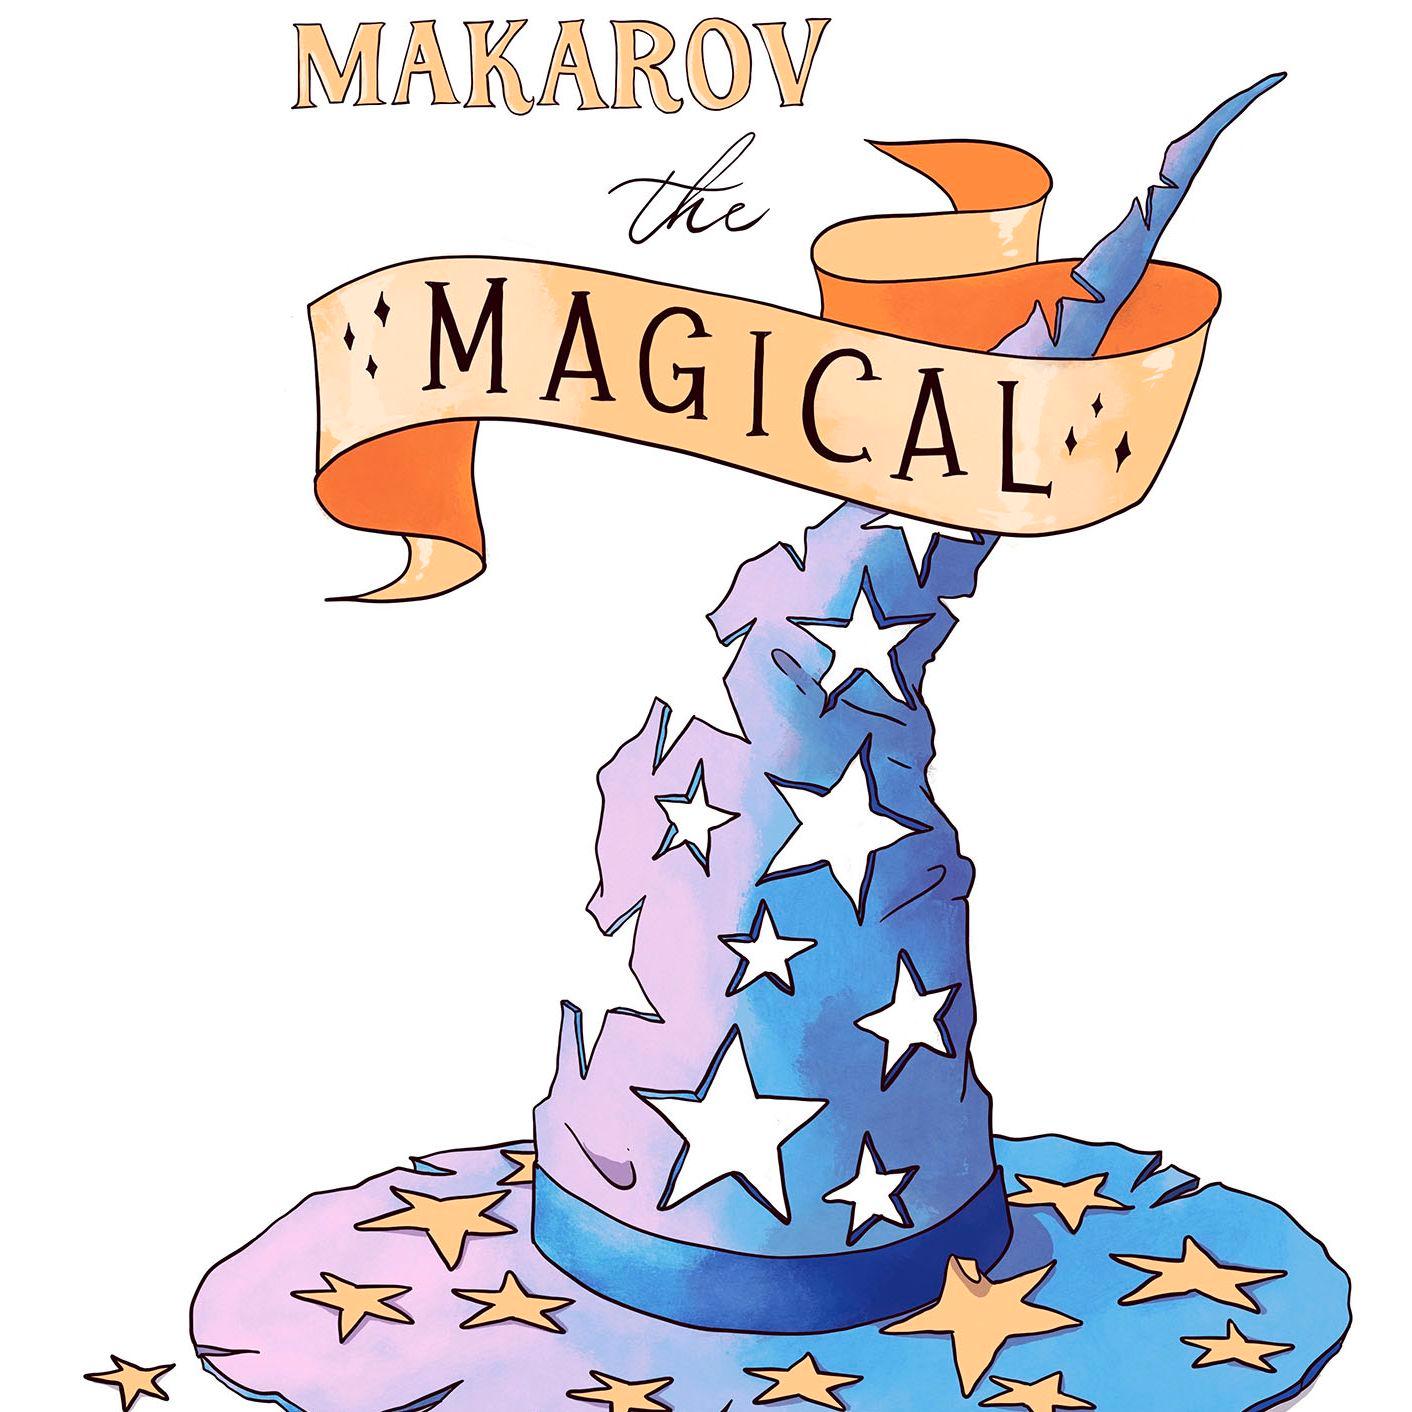 Thumbnail for "222 - Makarov the Magical".